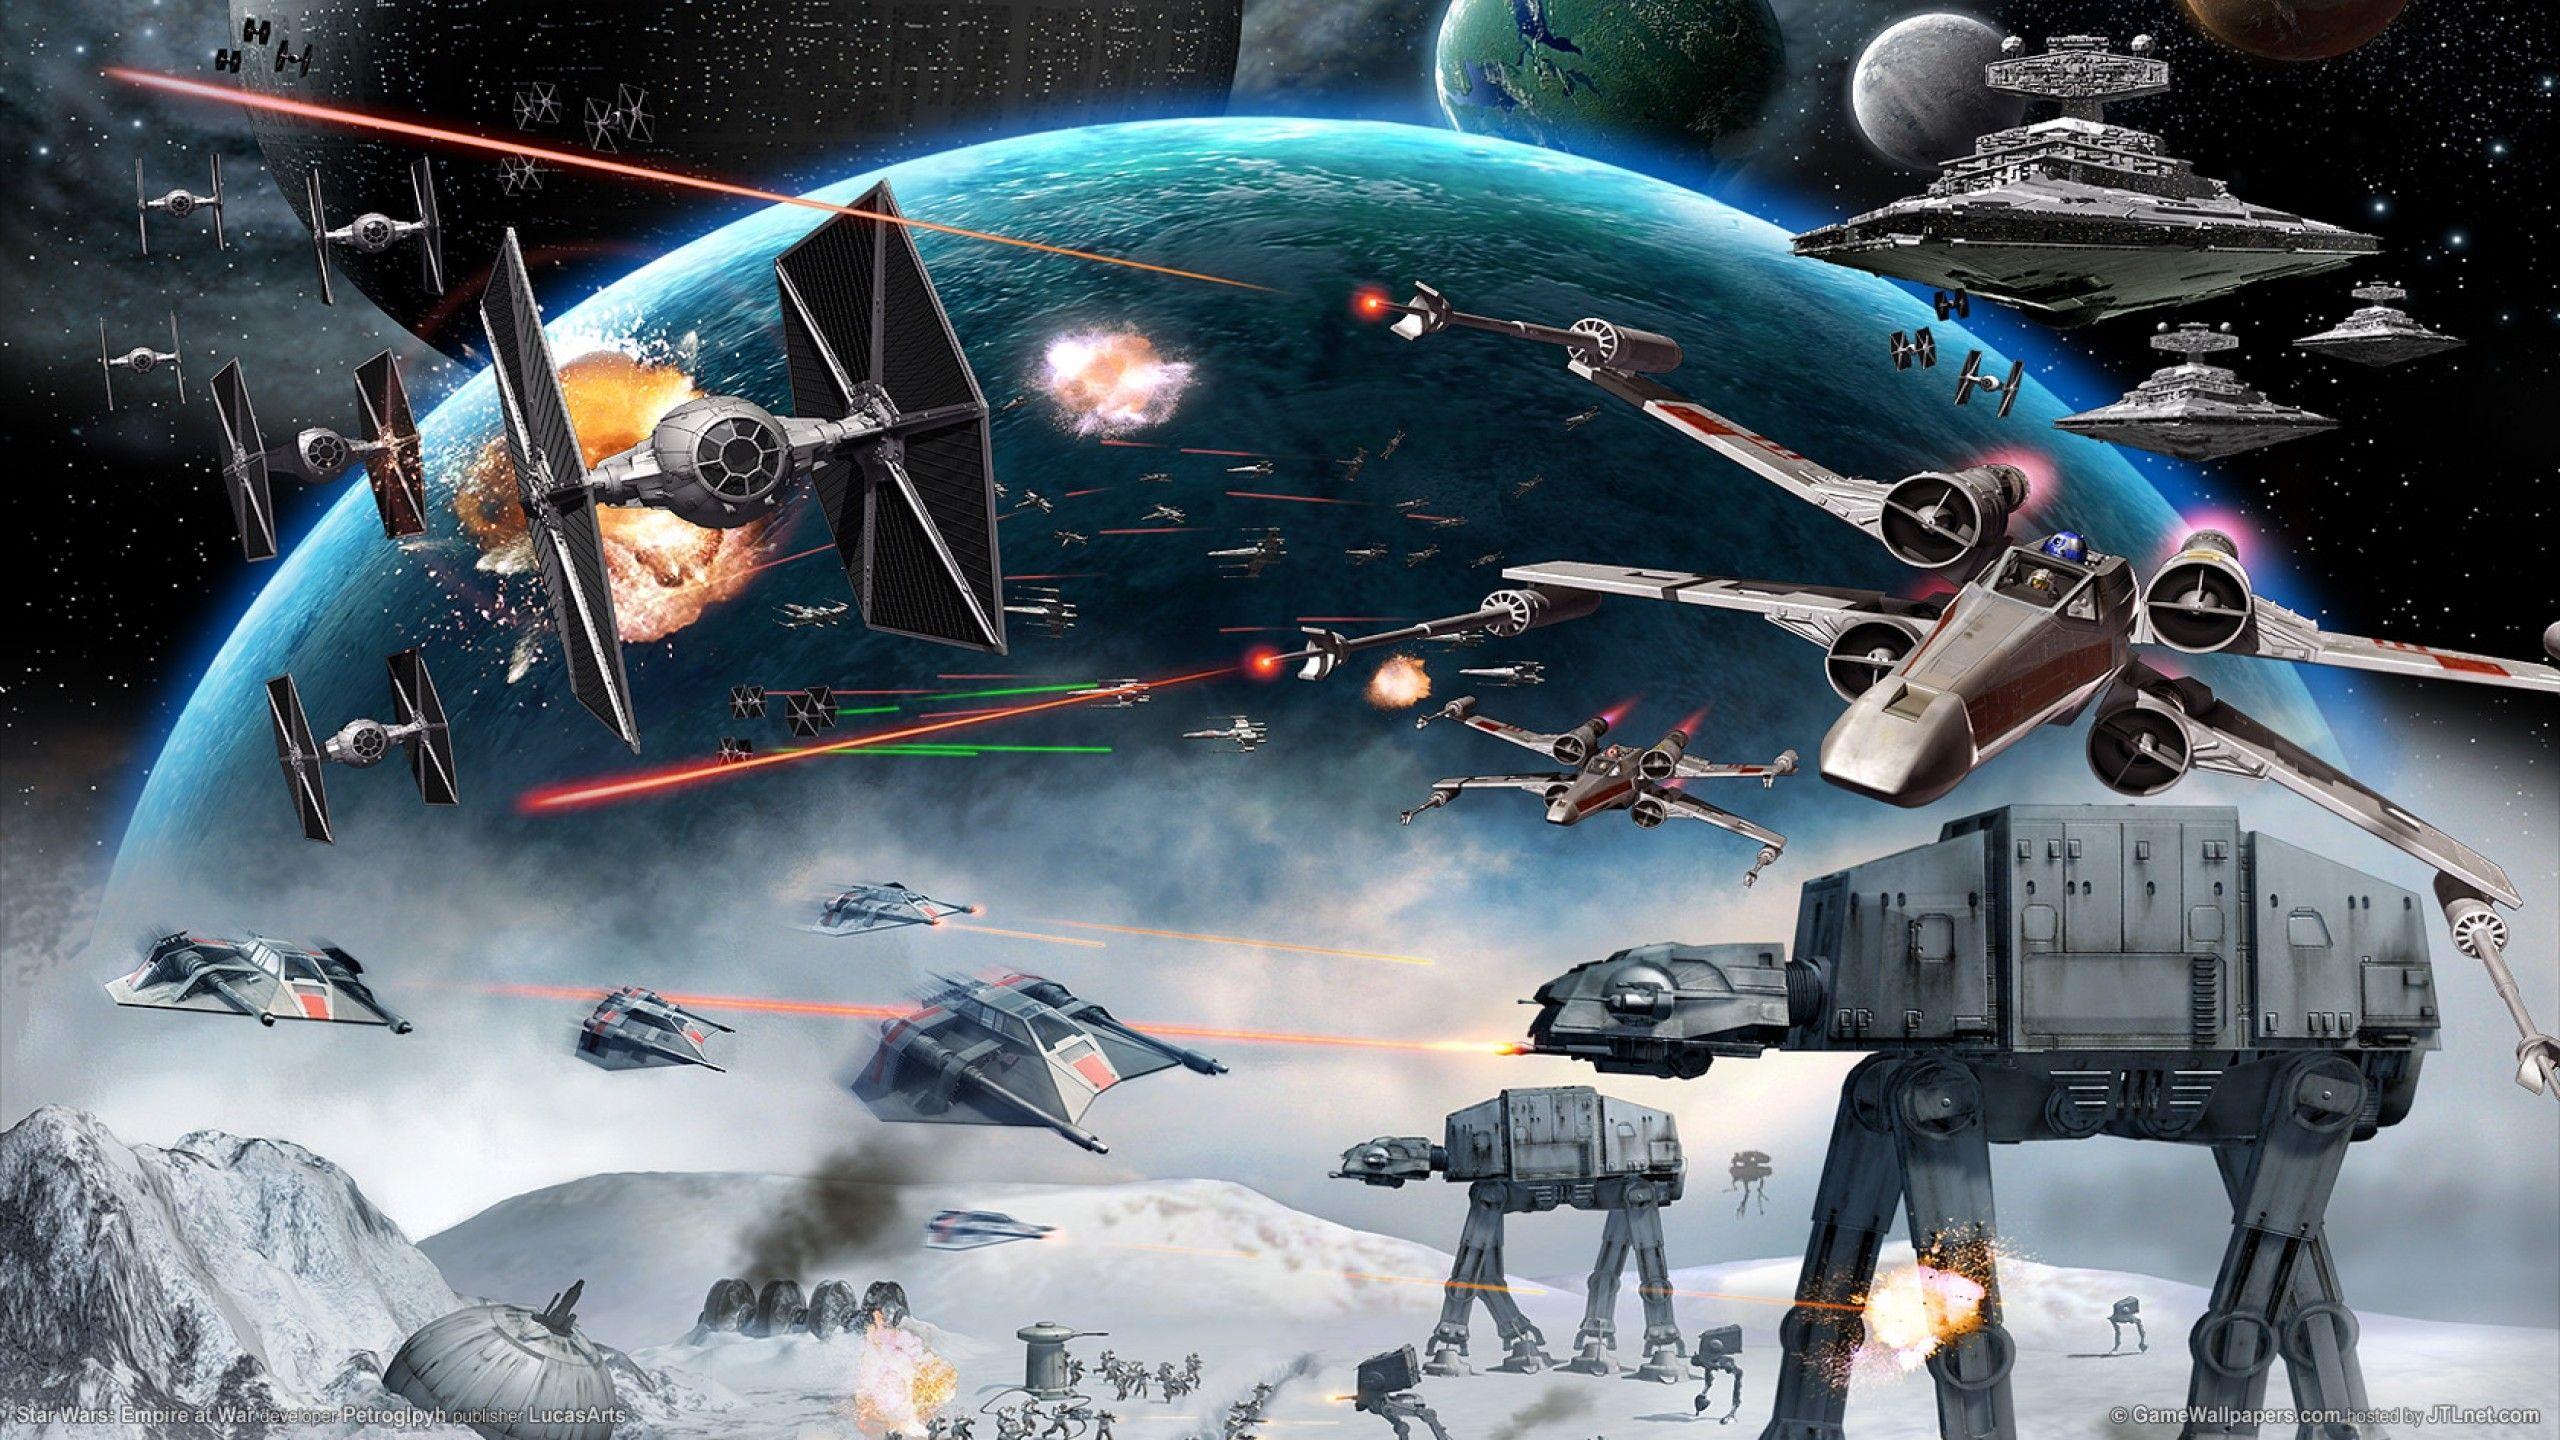 Star Wars Space Battle Wallpapers - Top Free Star Wars Space Battle